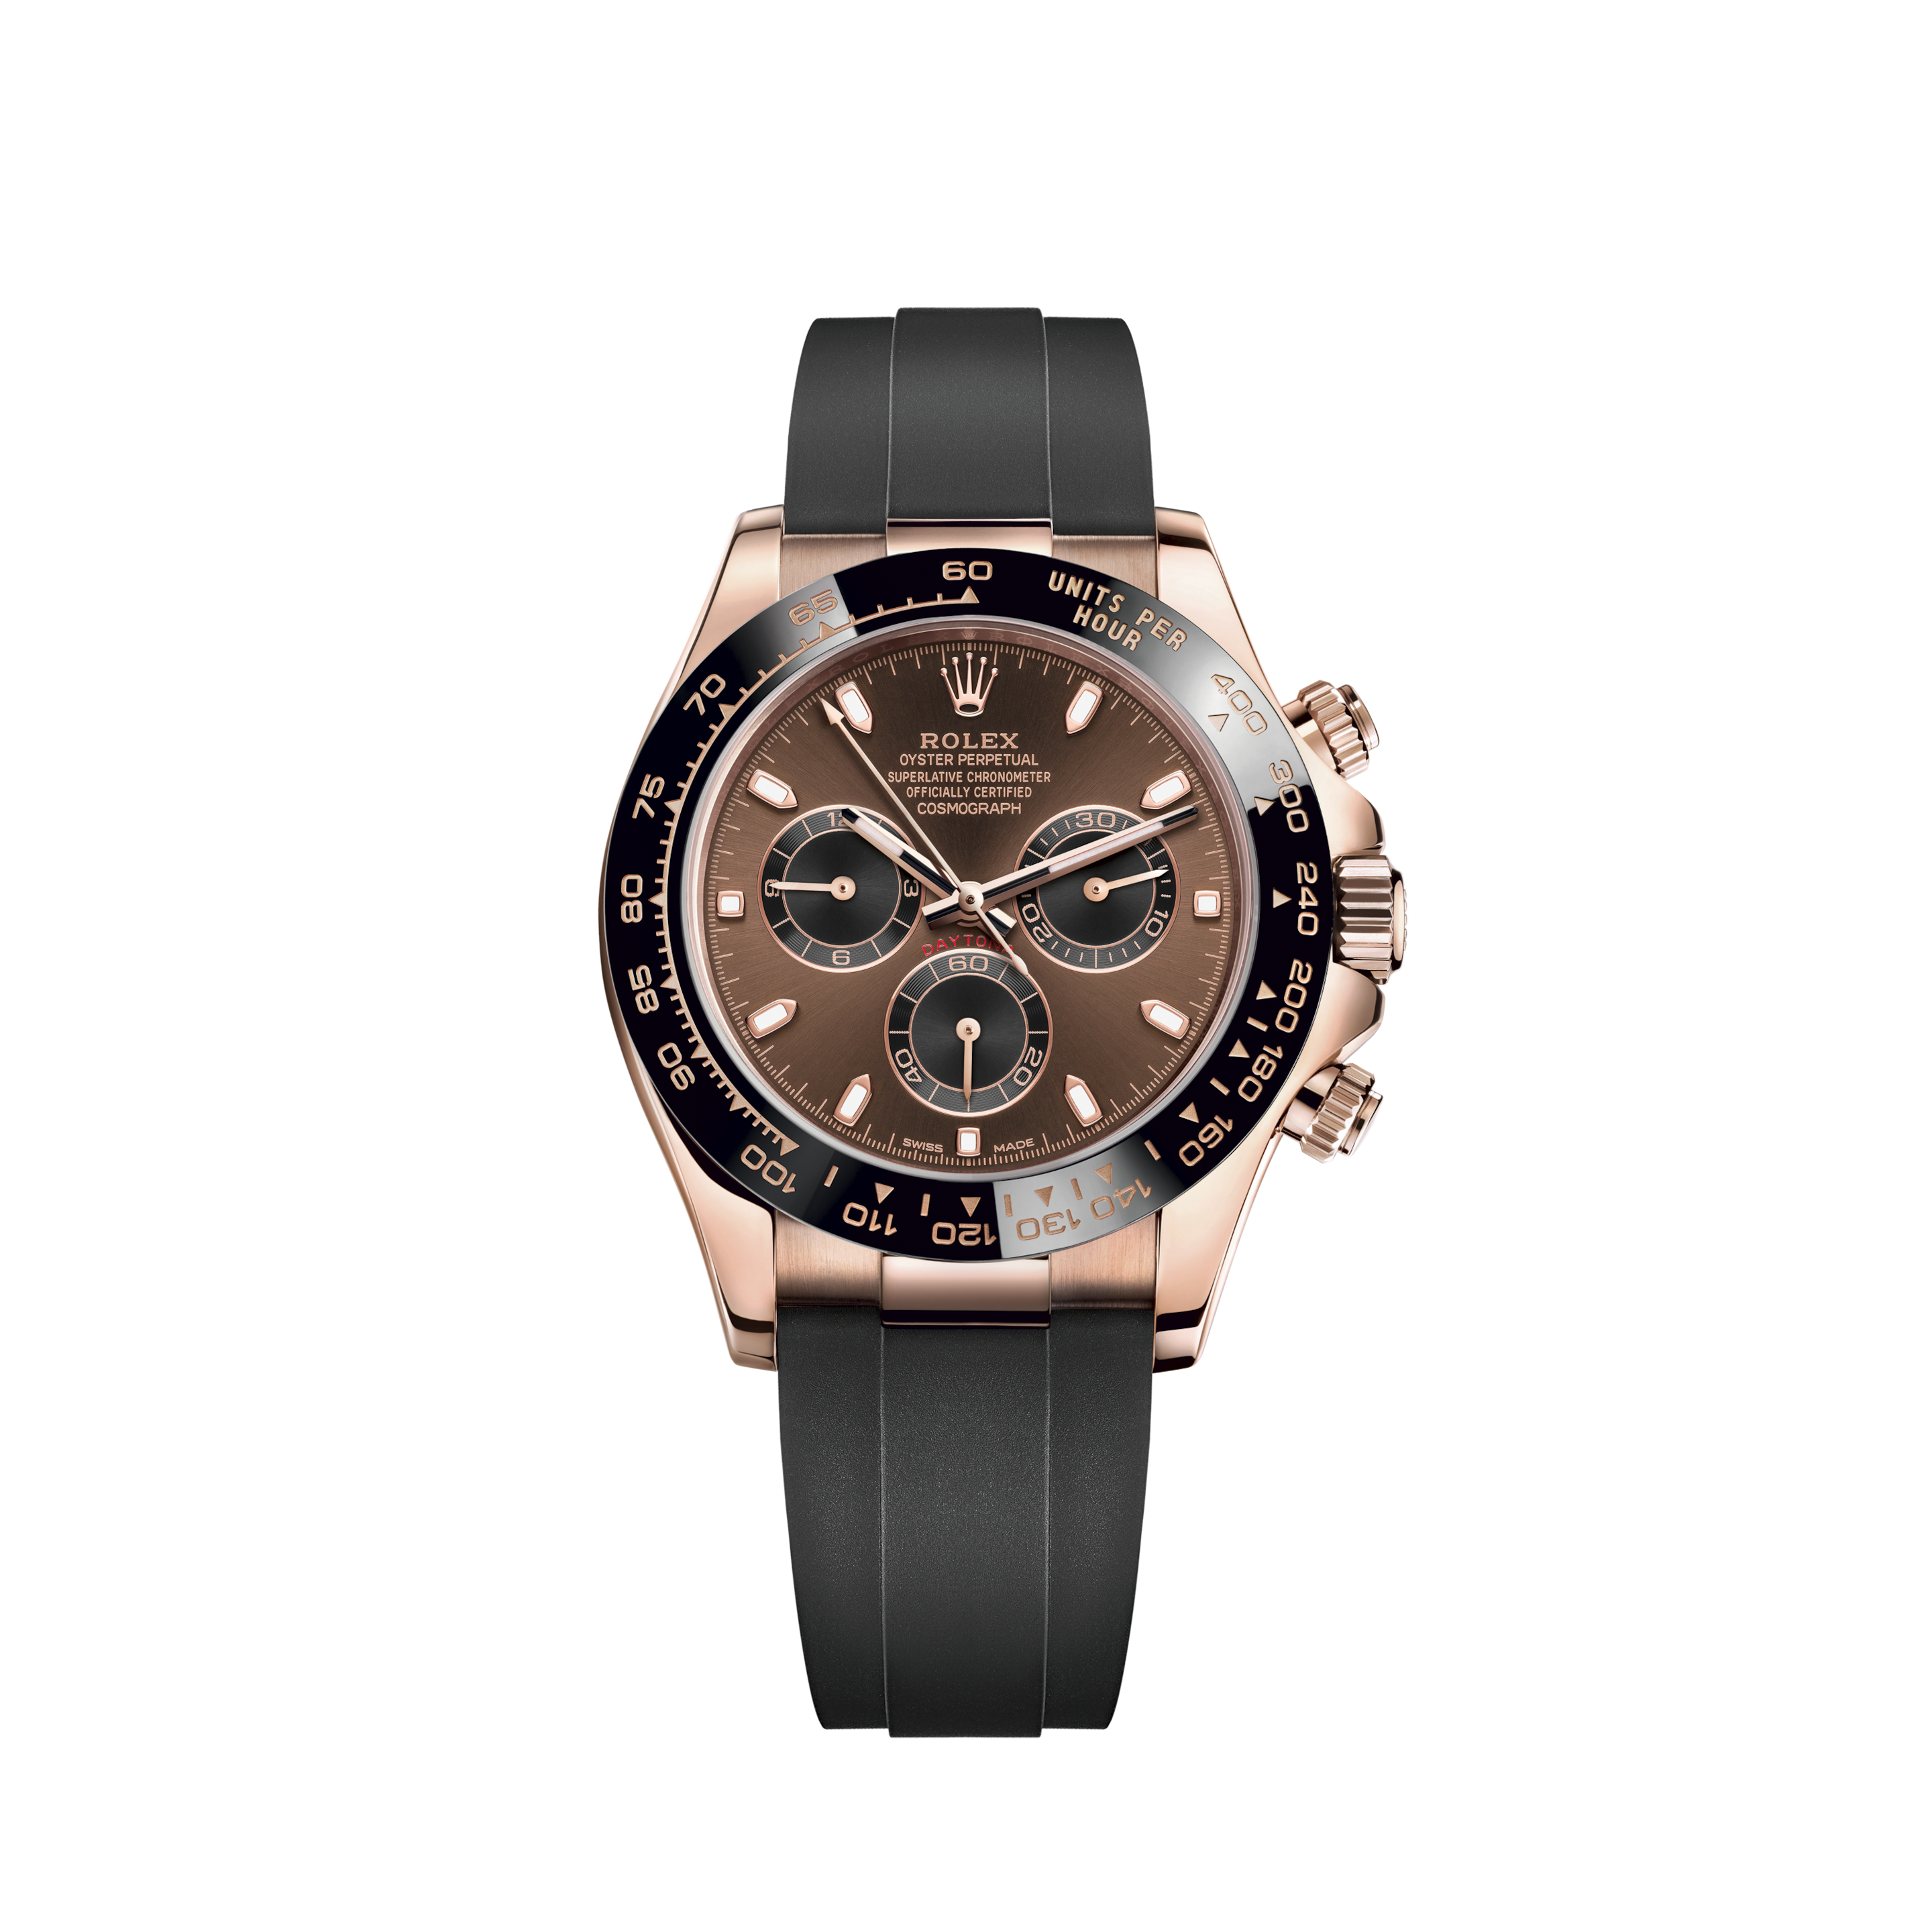 Rolex Datejust Men's 2-Tone Watch 116233